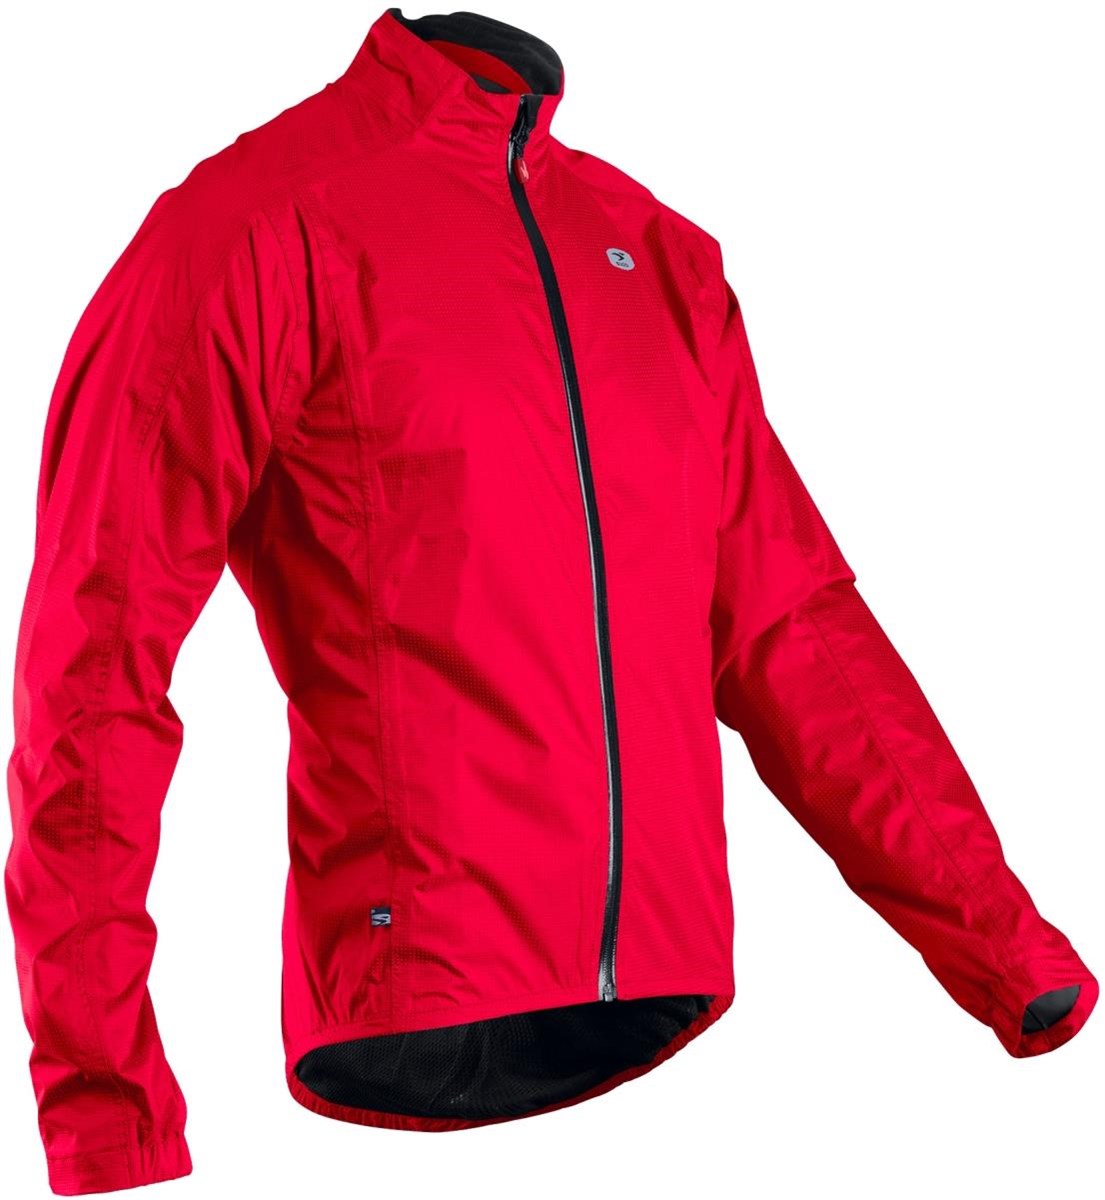 Sugoi Zap Waterproof Cycling Jacket product image